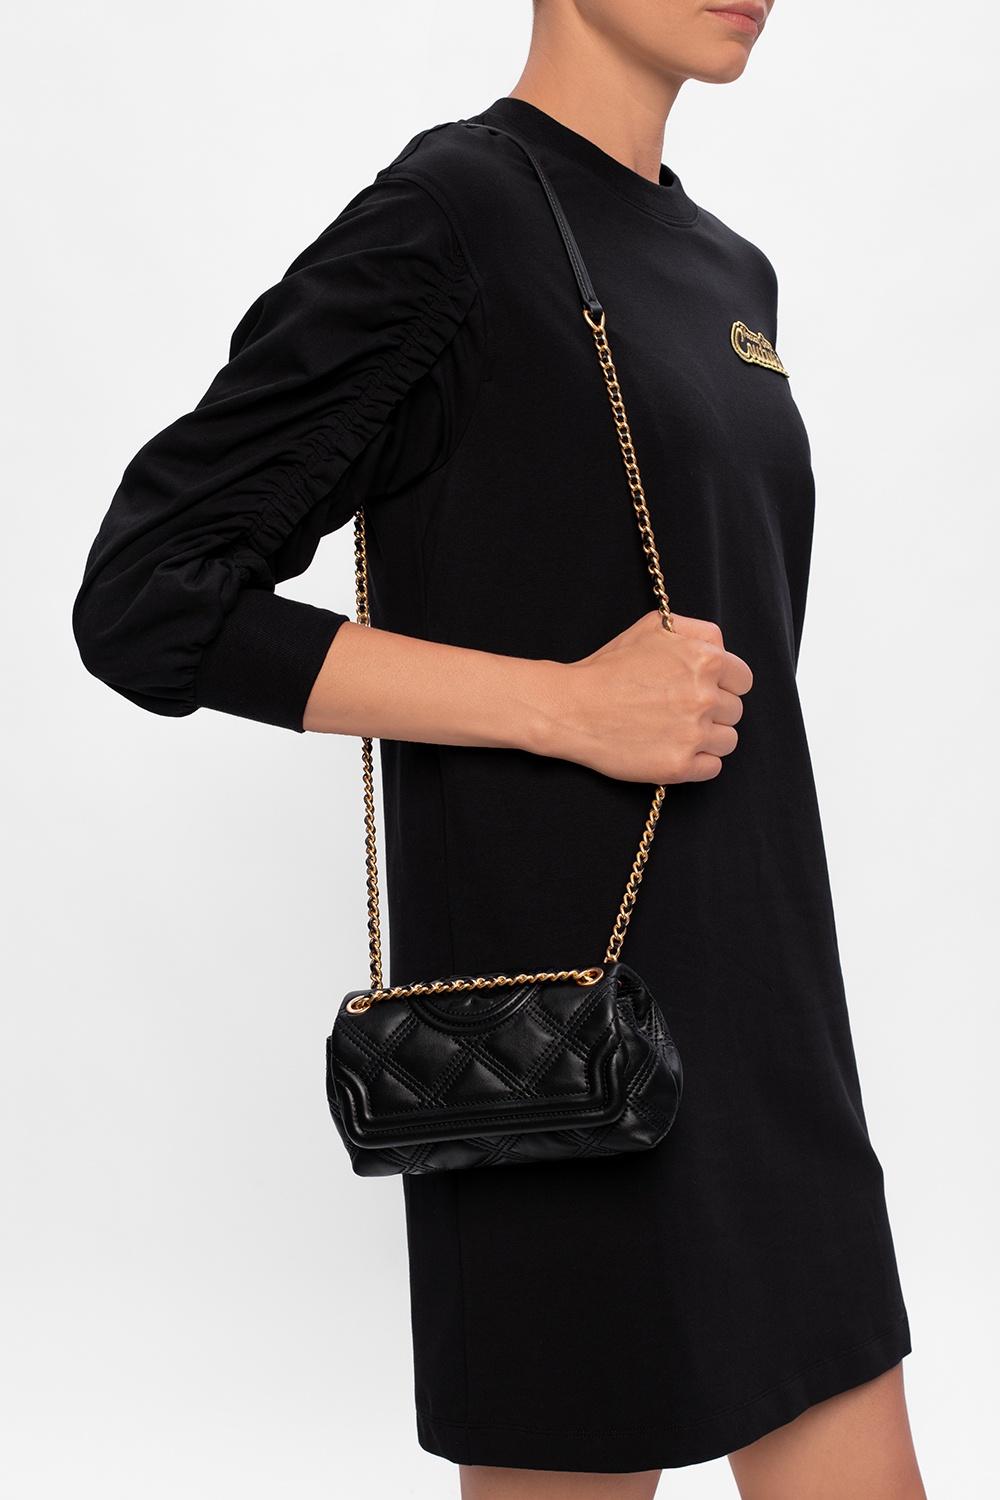 Tory Burch Fleming Soft Convertible Mini Bag in Black | Lyst UK